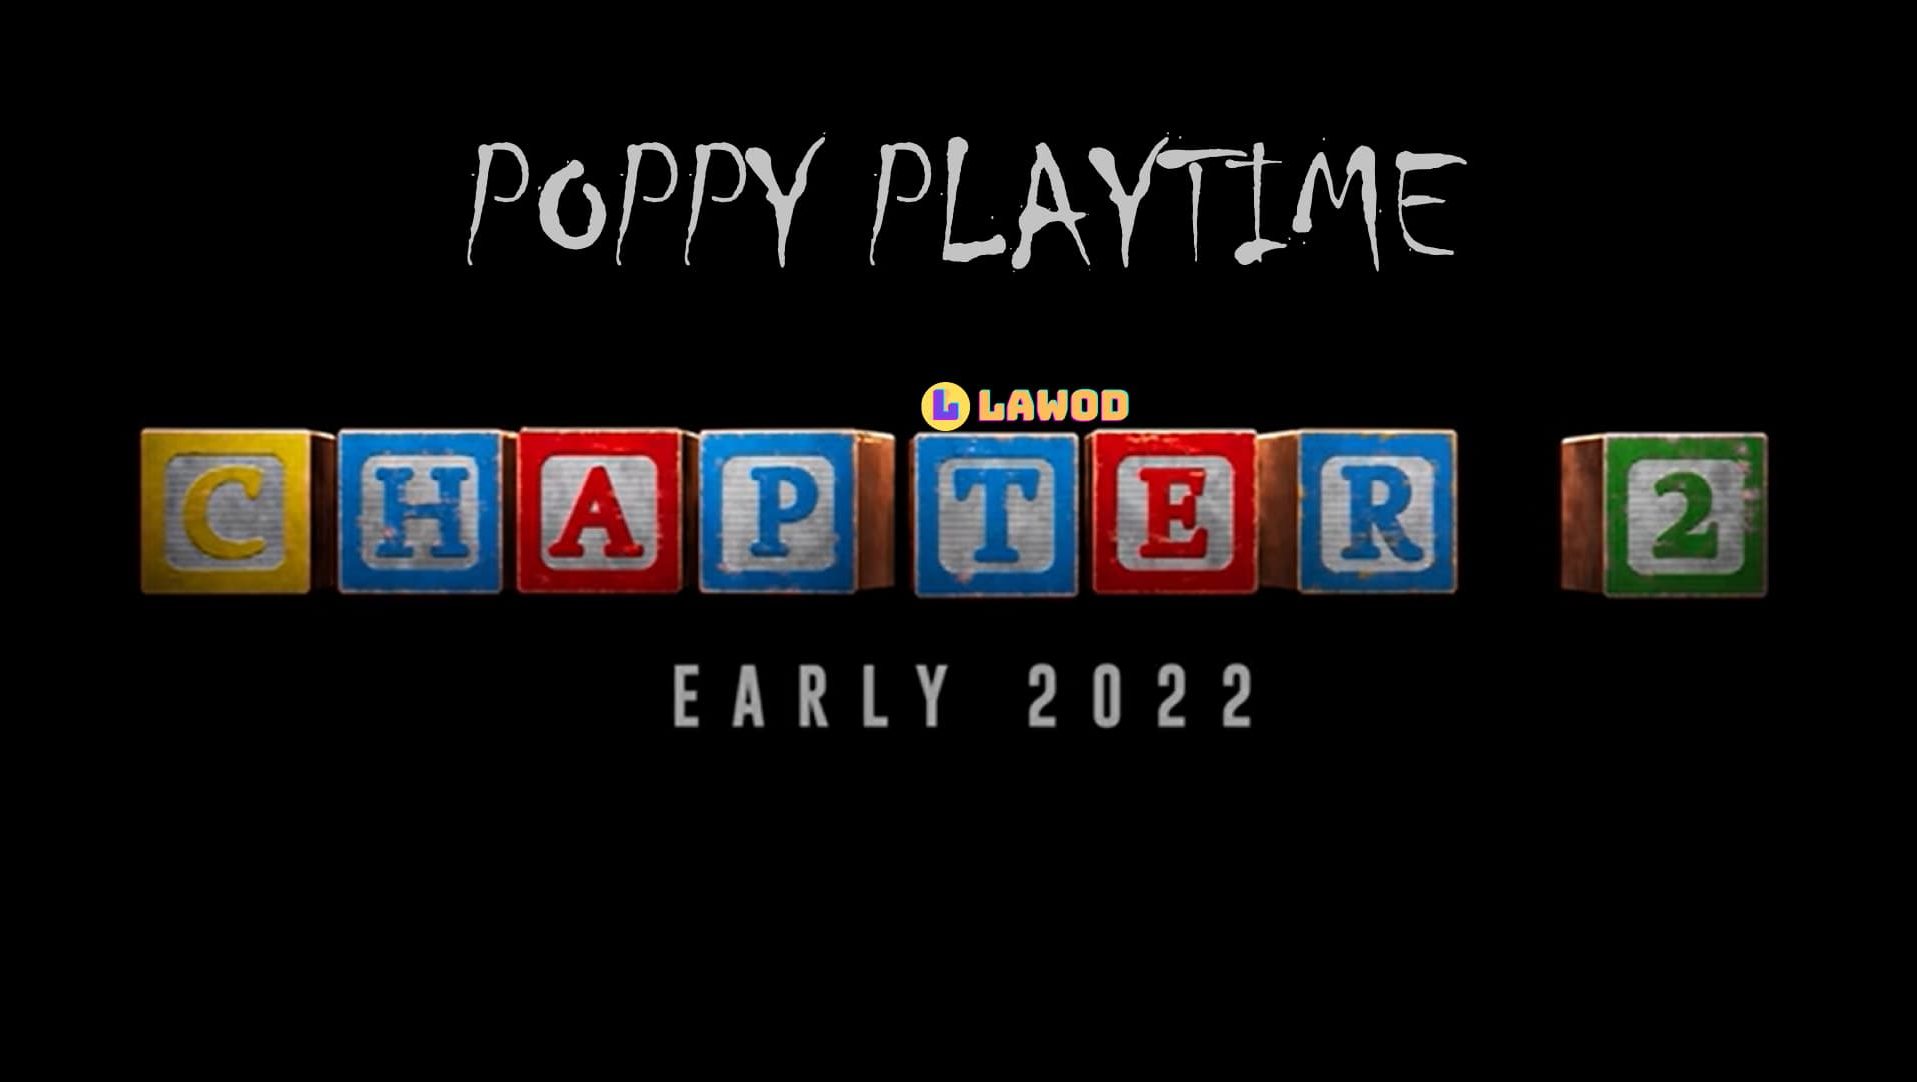 Poppy playtime 2 взломка